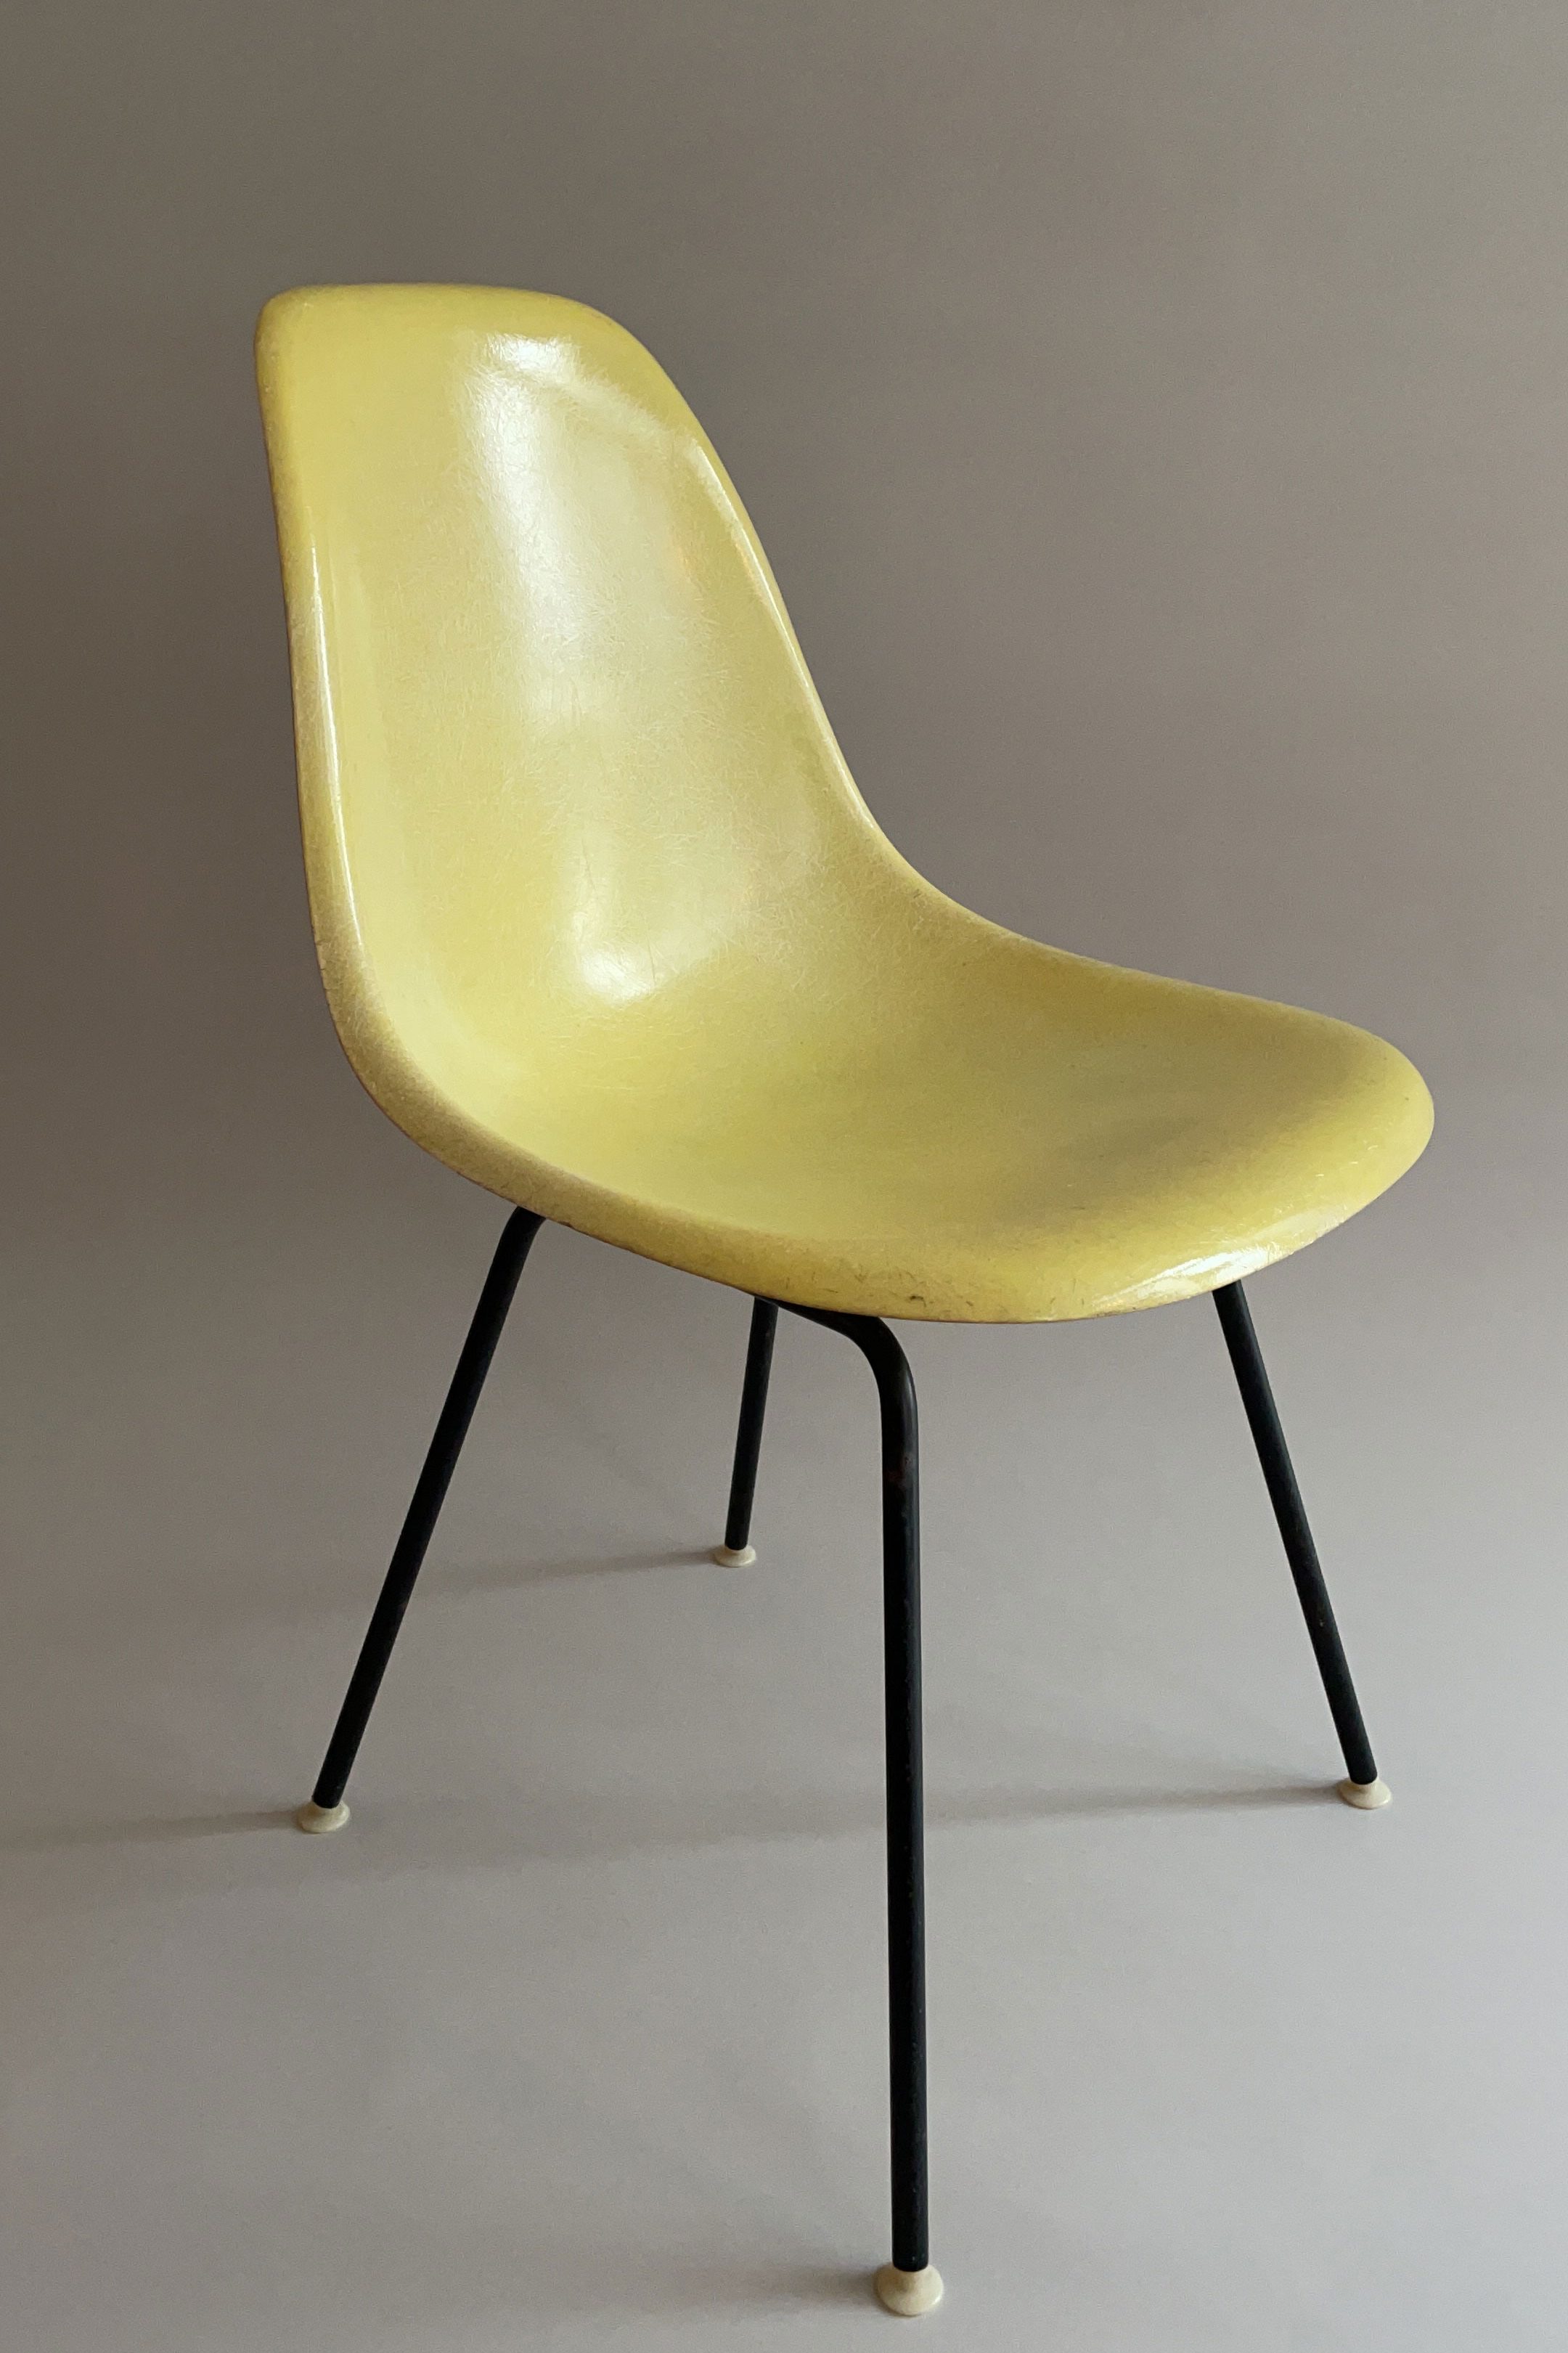 Lemon Yellow Fiberglass Side Chair by Herman Miller. Produced in Michigan. USA, 1957. Available at heyday möbel, Grubenstrasse 19, 8045 Zürich, Switzerland.